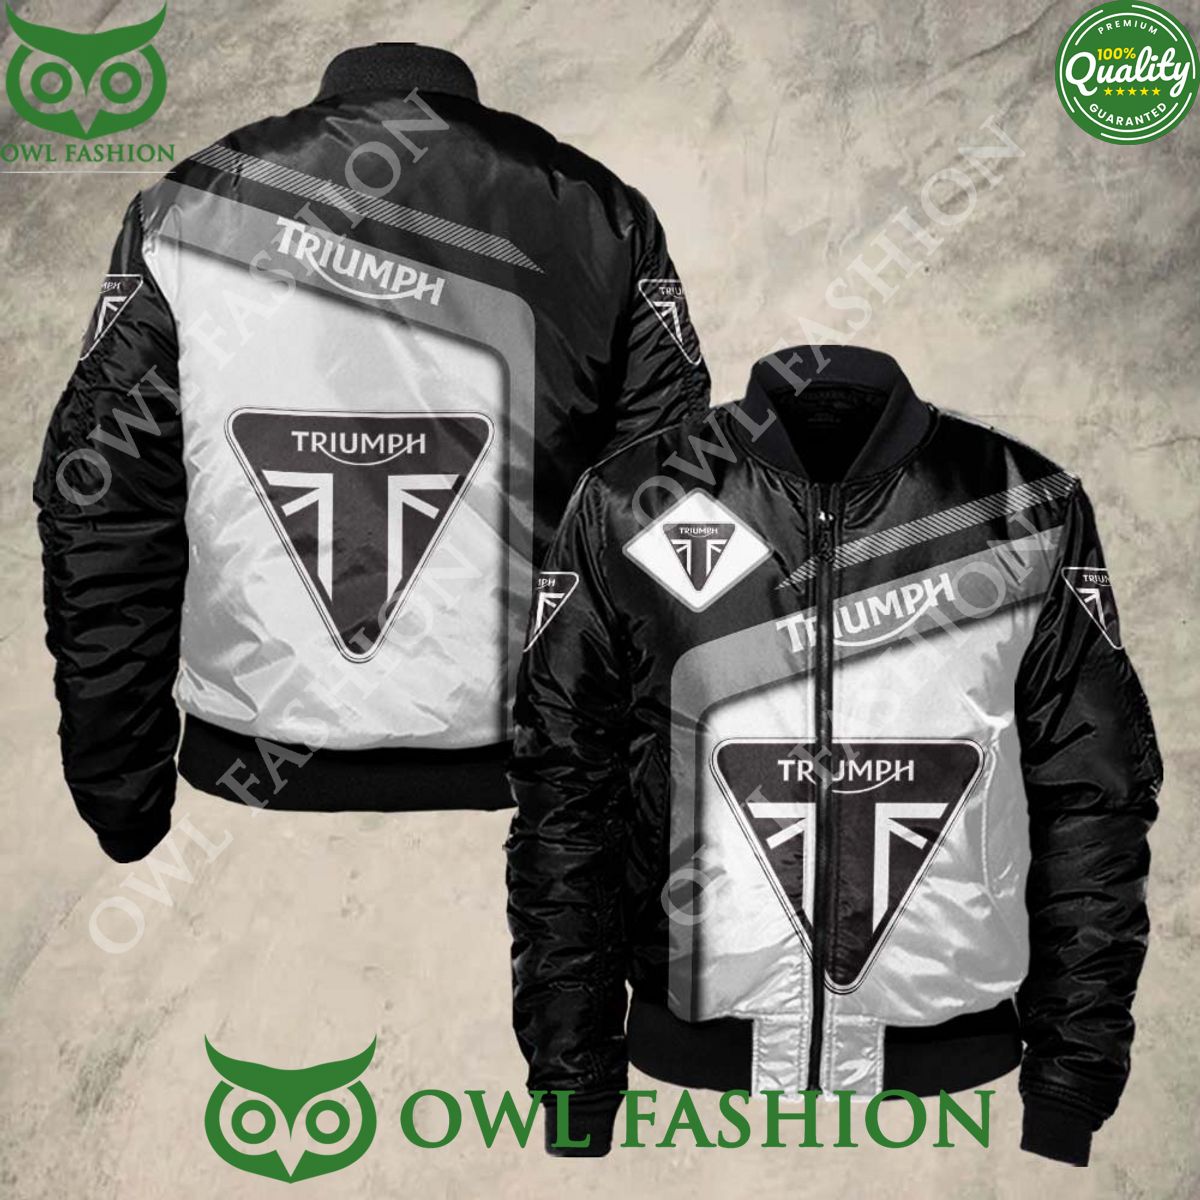 triumph motorcycles sport 3d bomber jacket 1 tdgey.jpg